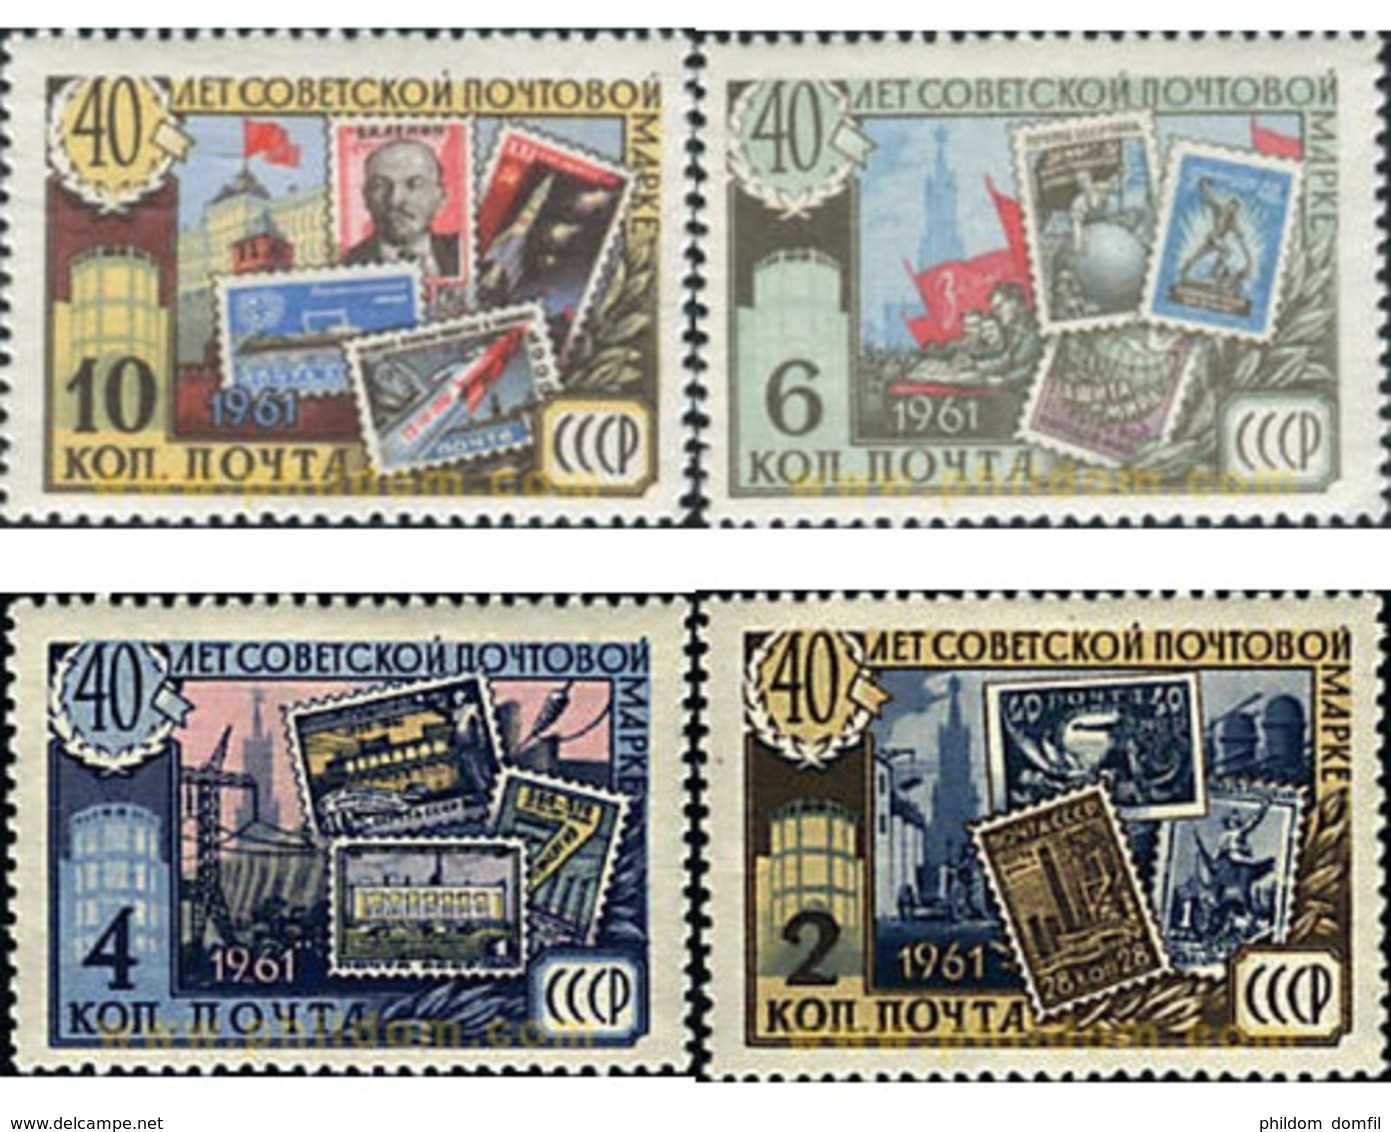 Ref. 43191 * MNH * - SOVIET UNION. 1961. 40 ANIVERSARIO DEL SELLO SOVIETICO - Unused Stamps